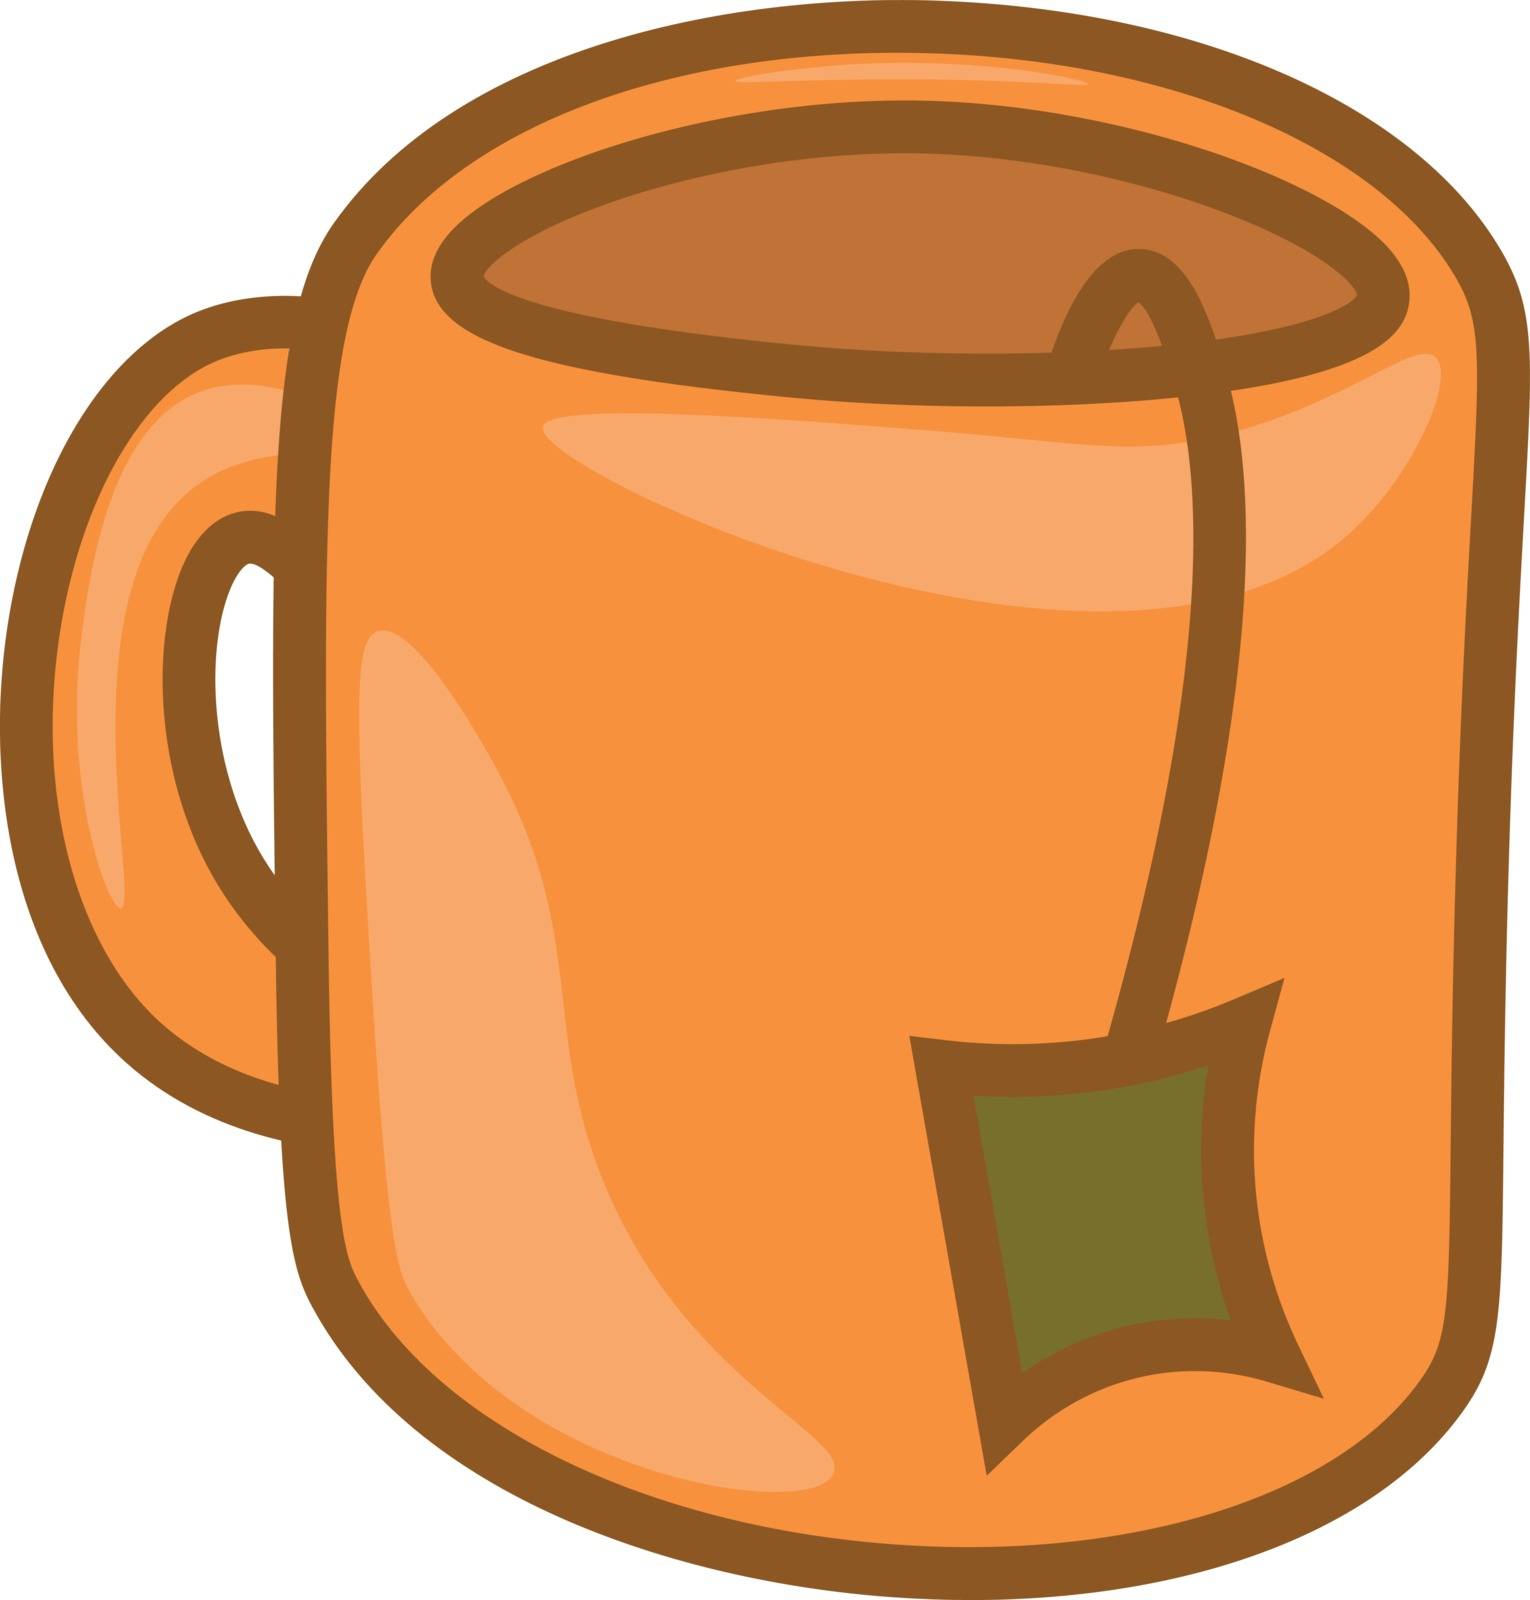 A tea bag dipped in an orange tea mug/Teatime vector or color il by Morphart